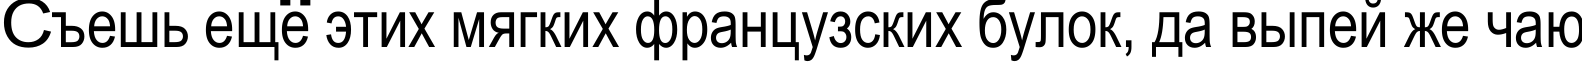 Пример написания шрифтом Julia Special Font W текста на русском